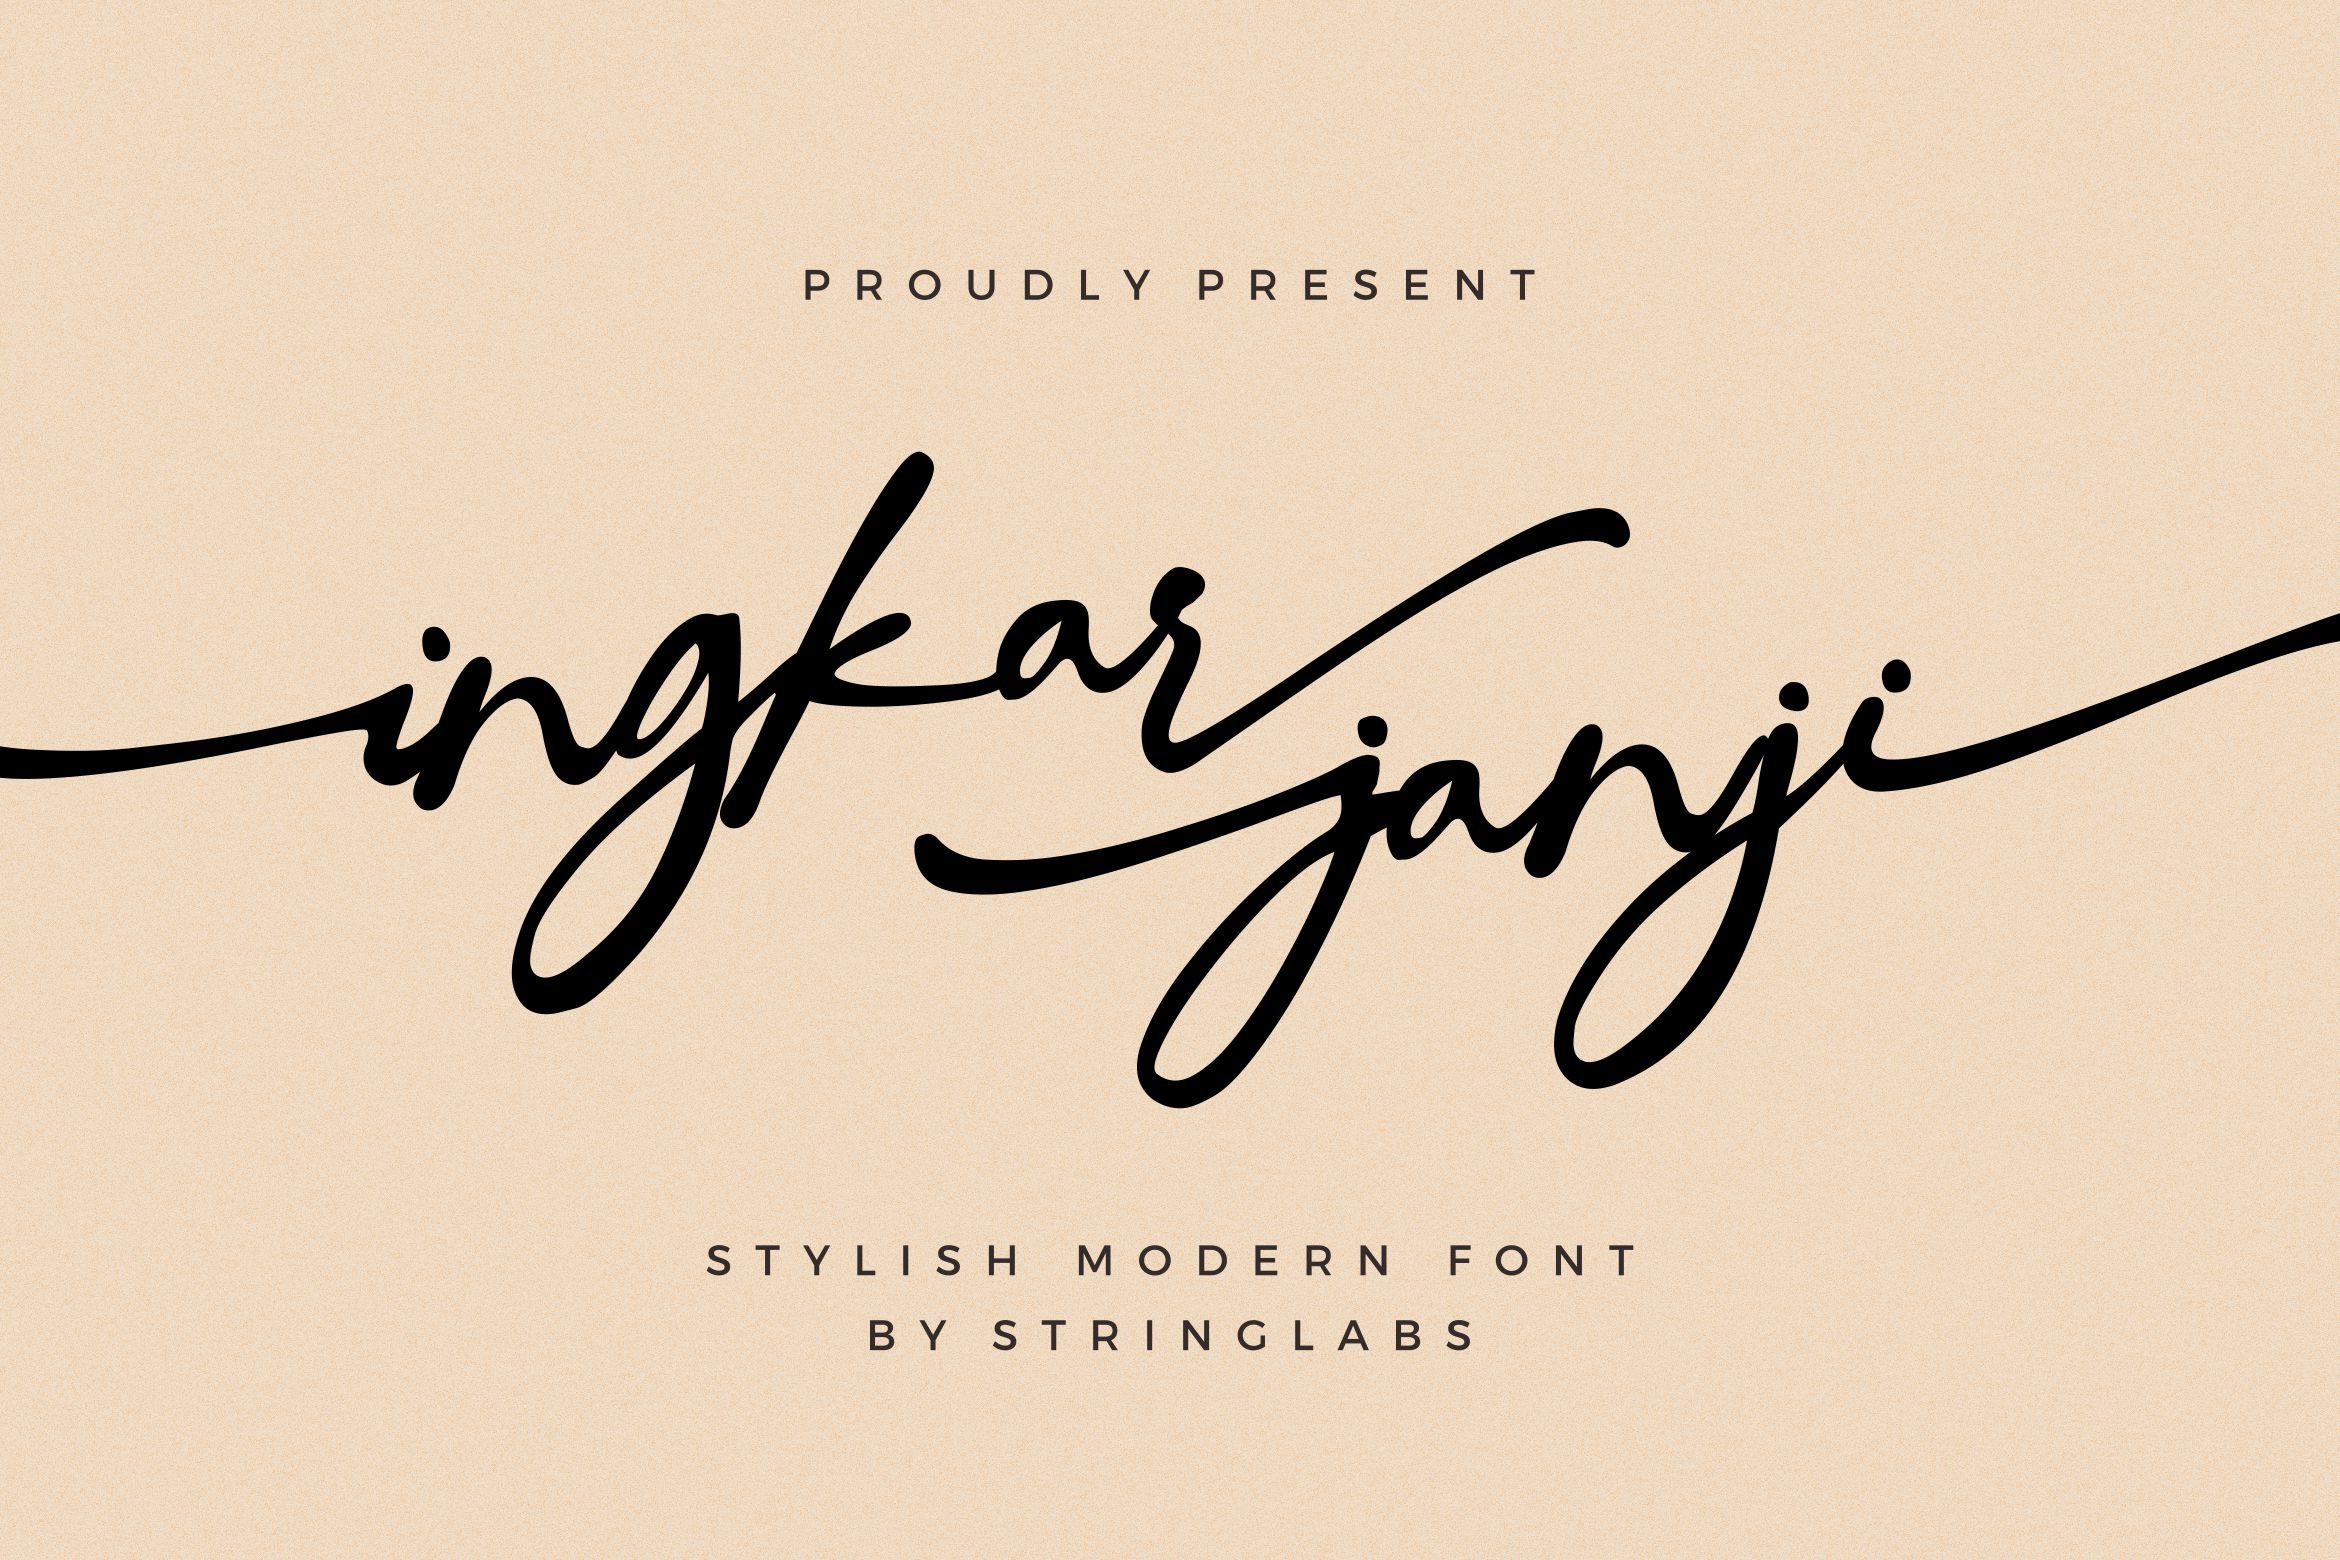 Ingkar Janji - Stylish Script Font cover image.